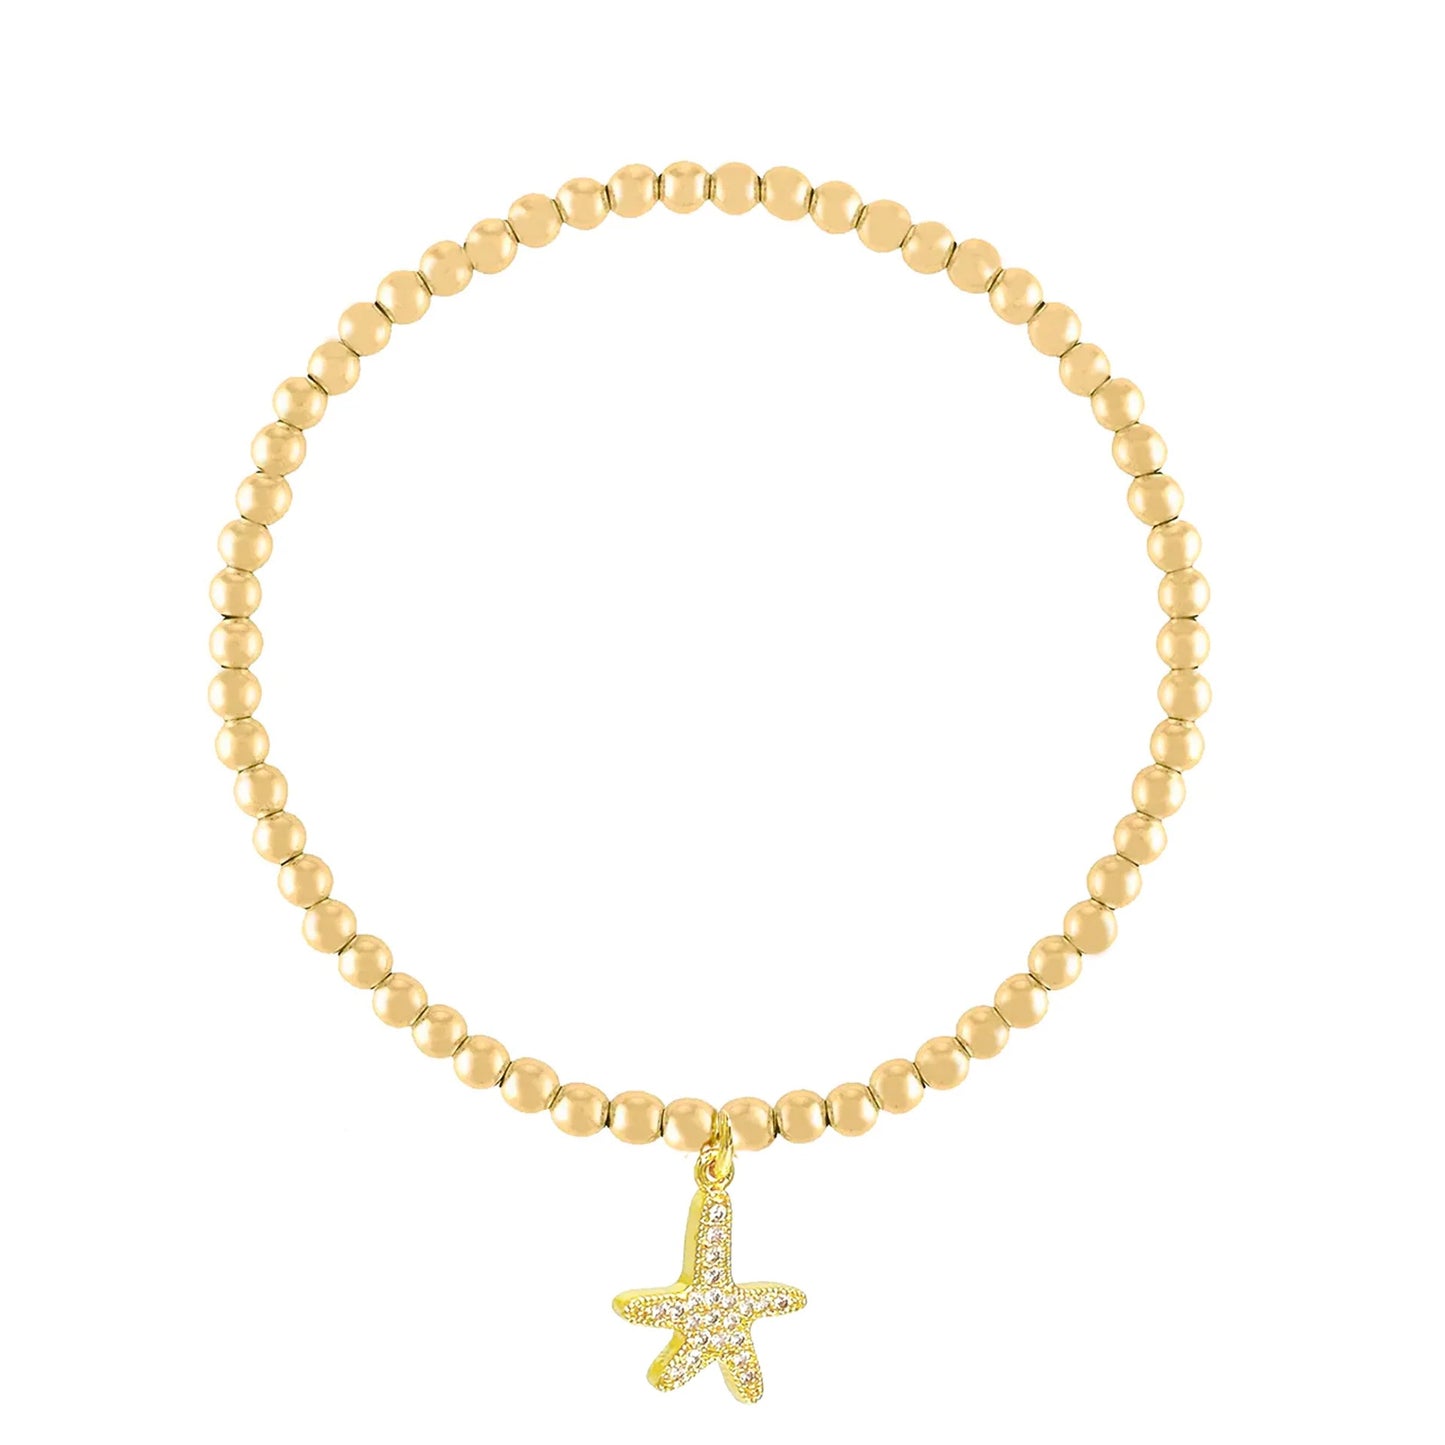 Starfish Ankle Bracelet